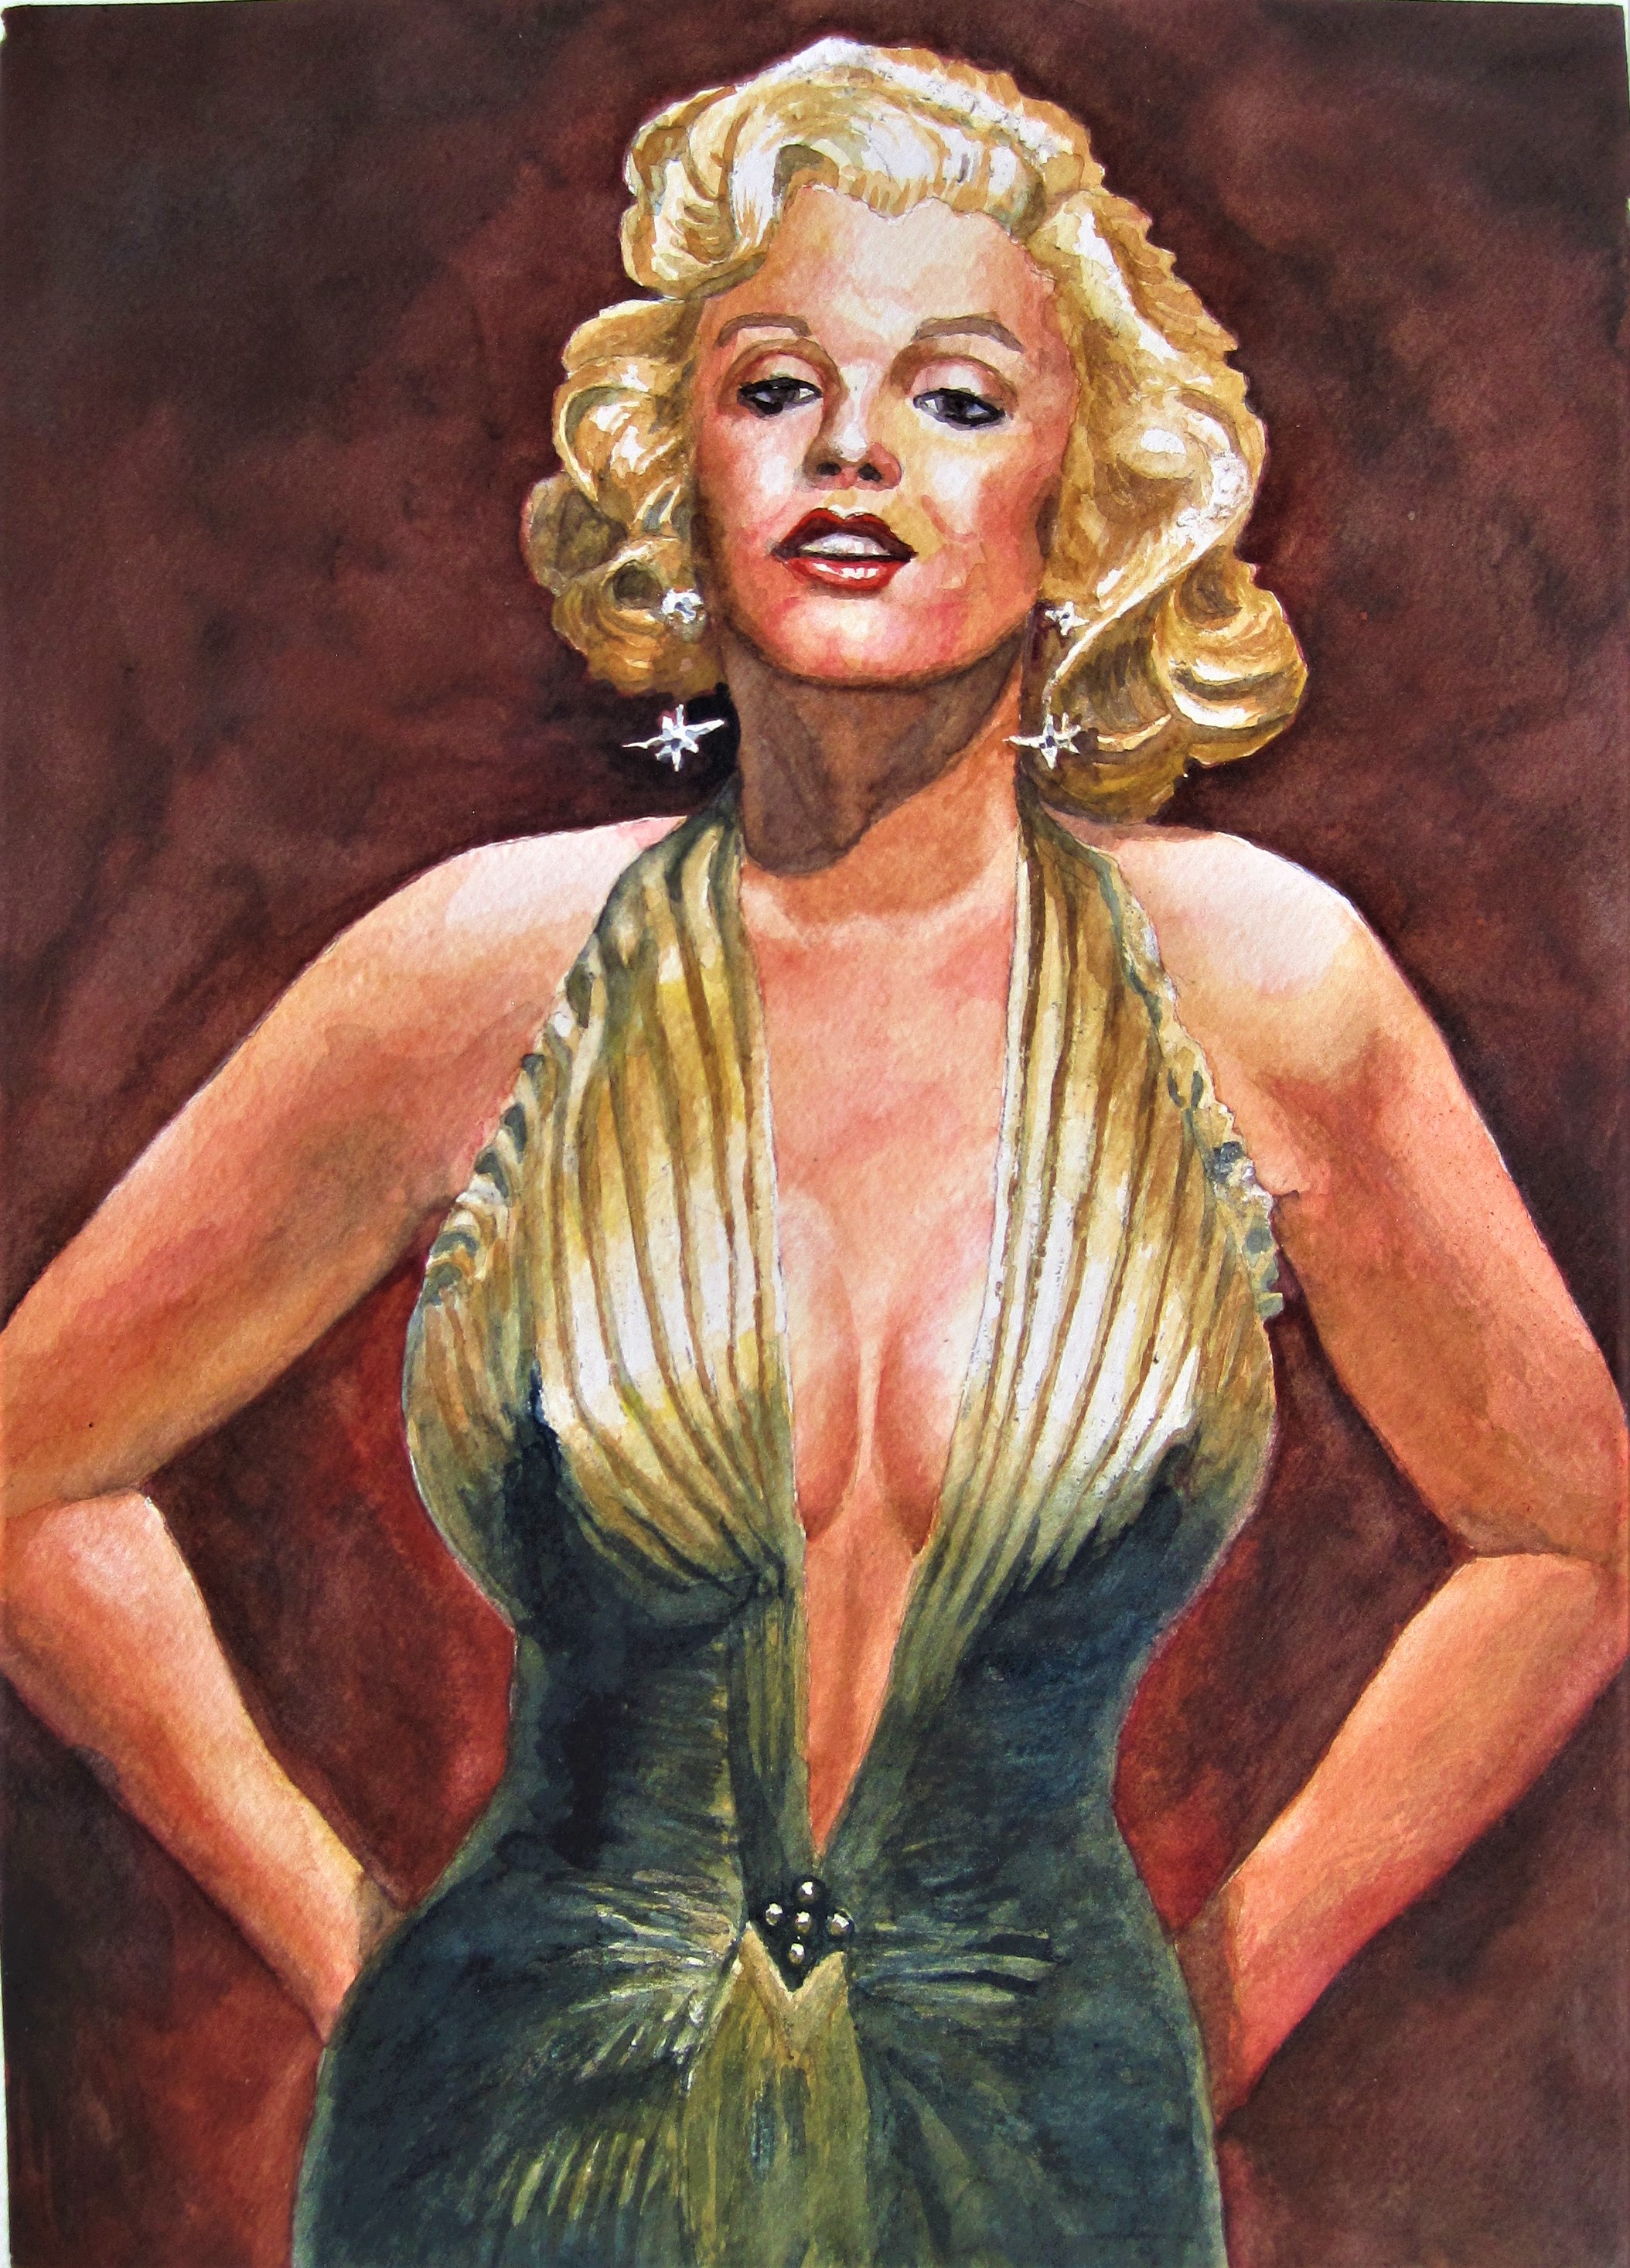 Marilyn, no doubt!